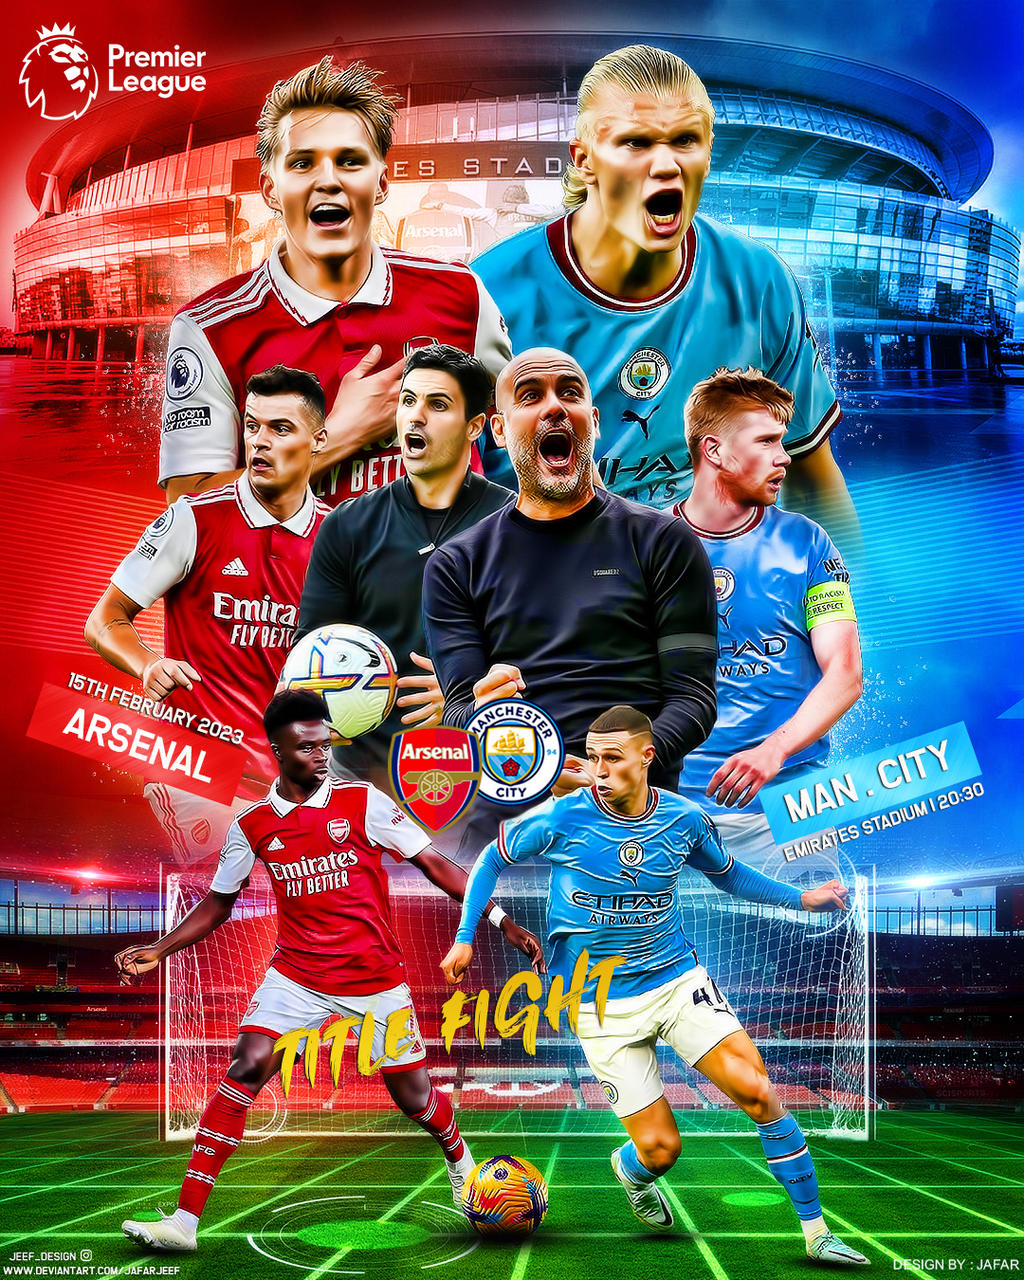 Manchester City x Arsenal - SoccerBlog